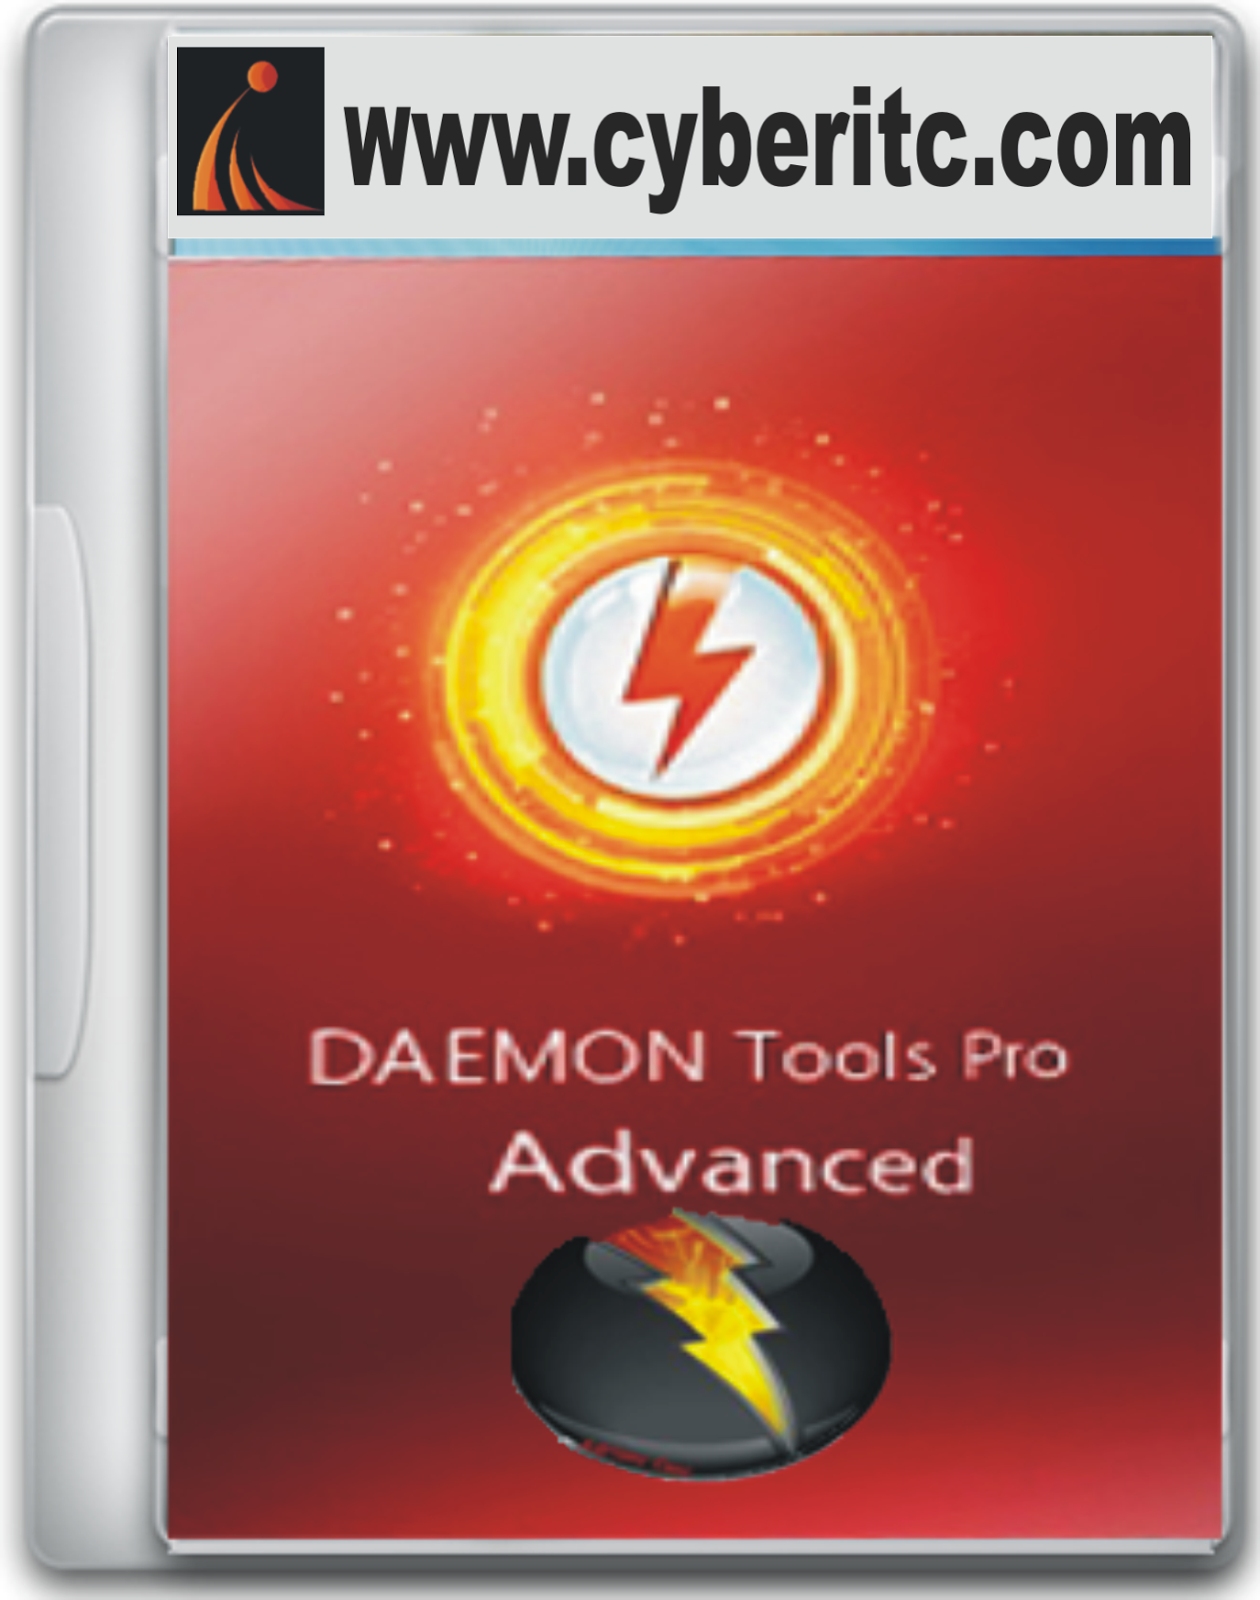 daemon tools pro advanced 4.41 crack free download